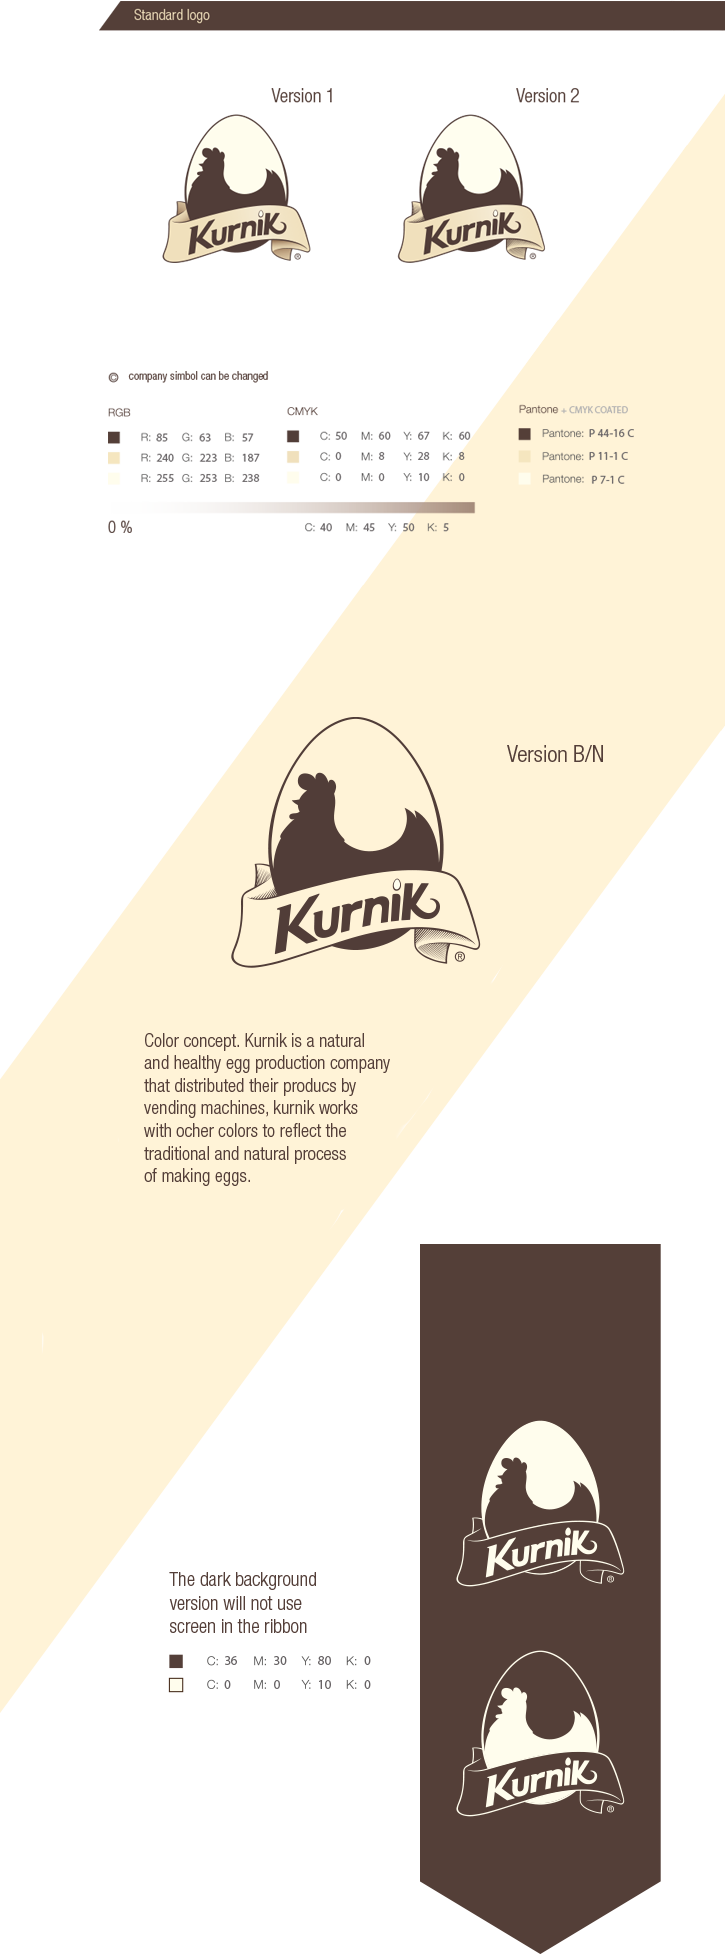 colombia wilson caceres wilson diseñador color Granja kurnik aves huevos natural Health brown brand marca asesoria de marca inspiration